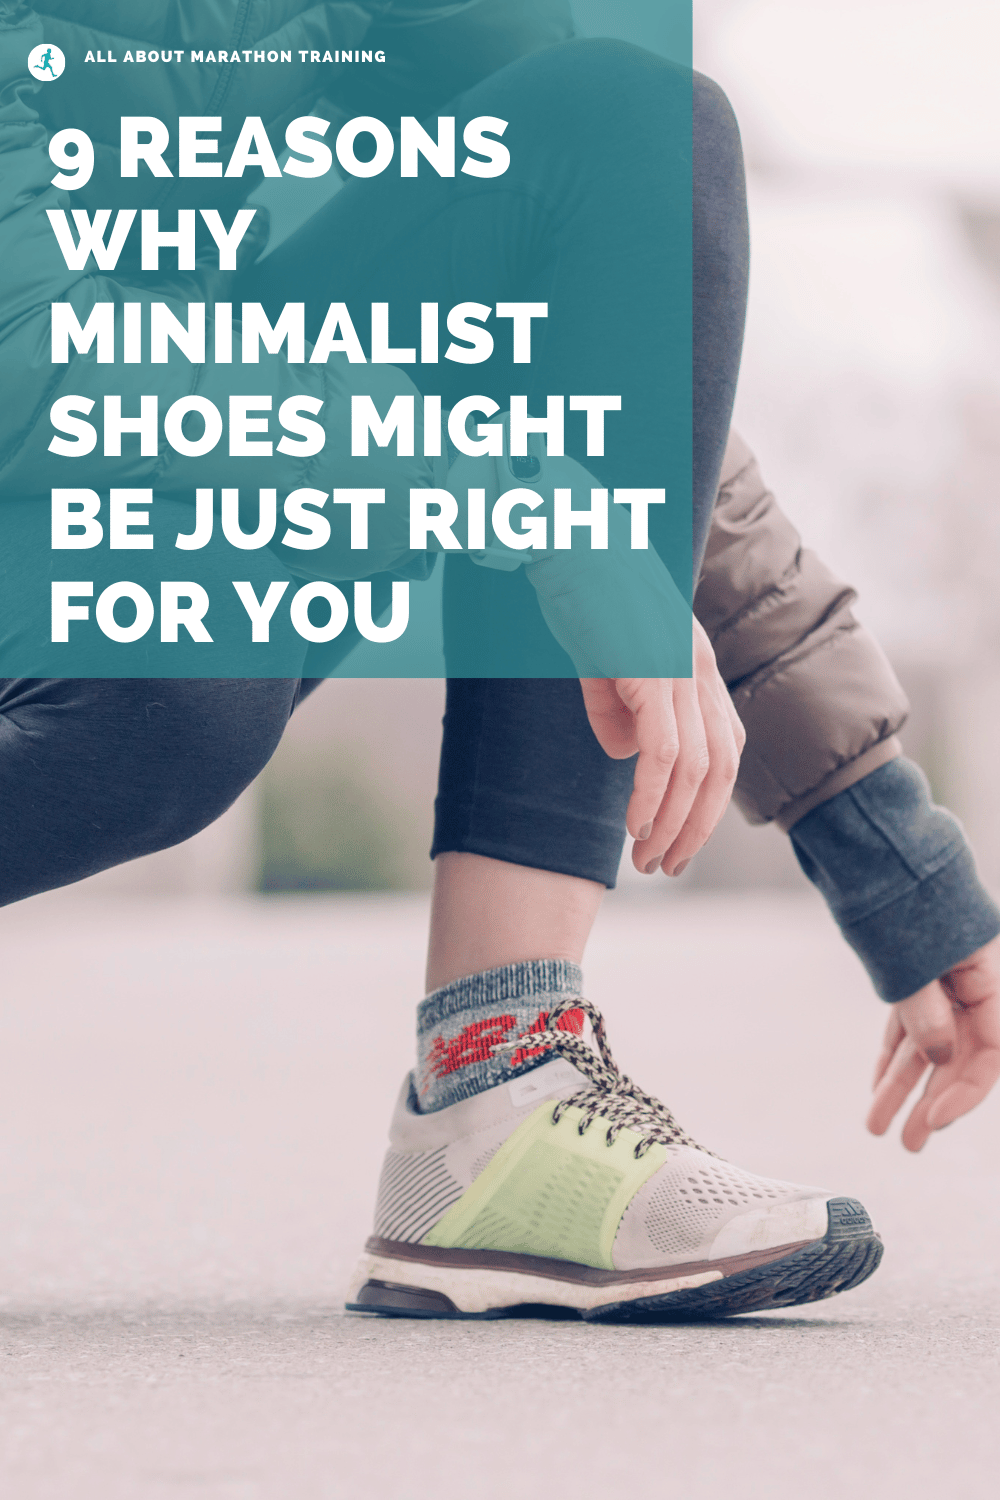 Best Minimalist Running Shoes Reasons